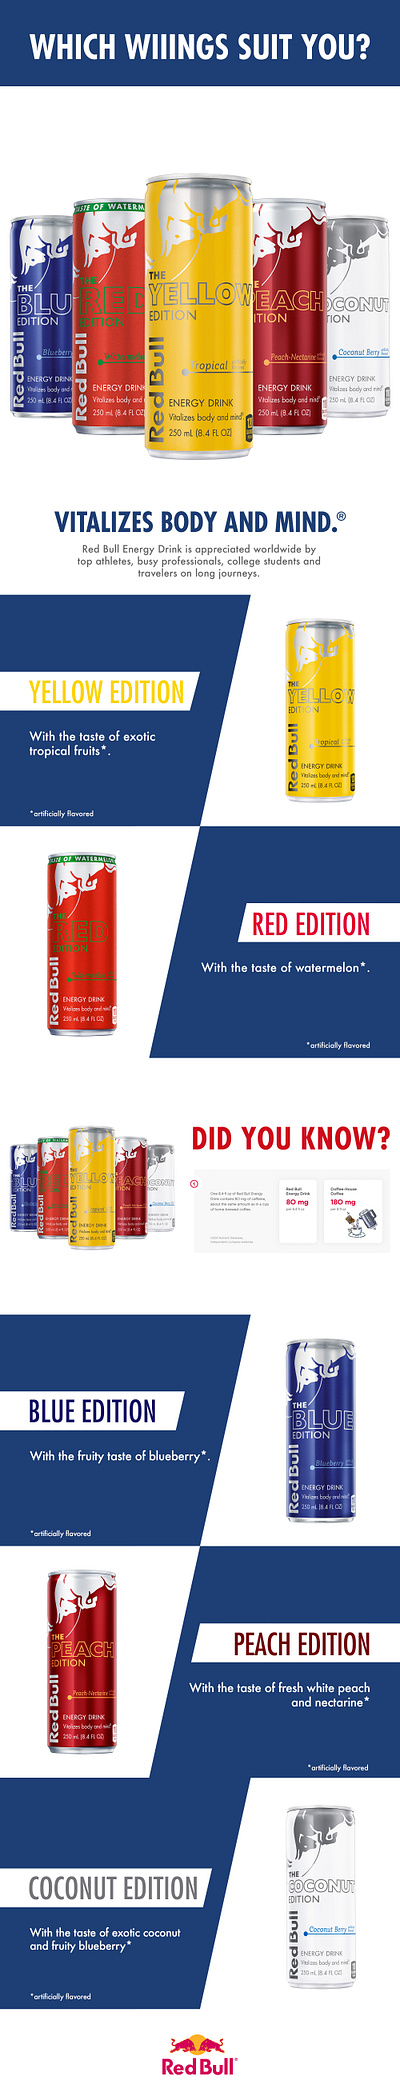 Red Bull Energy Drink - Amazon Enhanced Brand Content (EBC) a content branding design digital marketing enhanced brand content graphic design photoshop web banner design web design